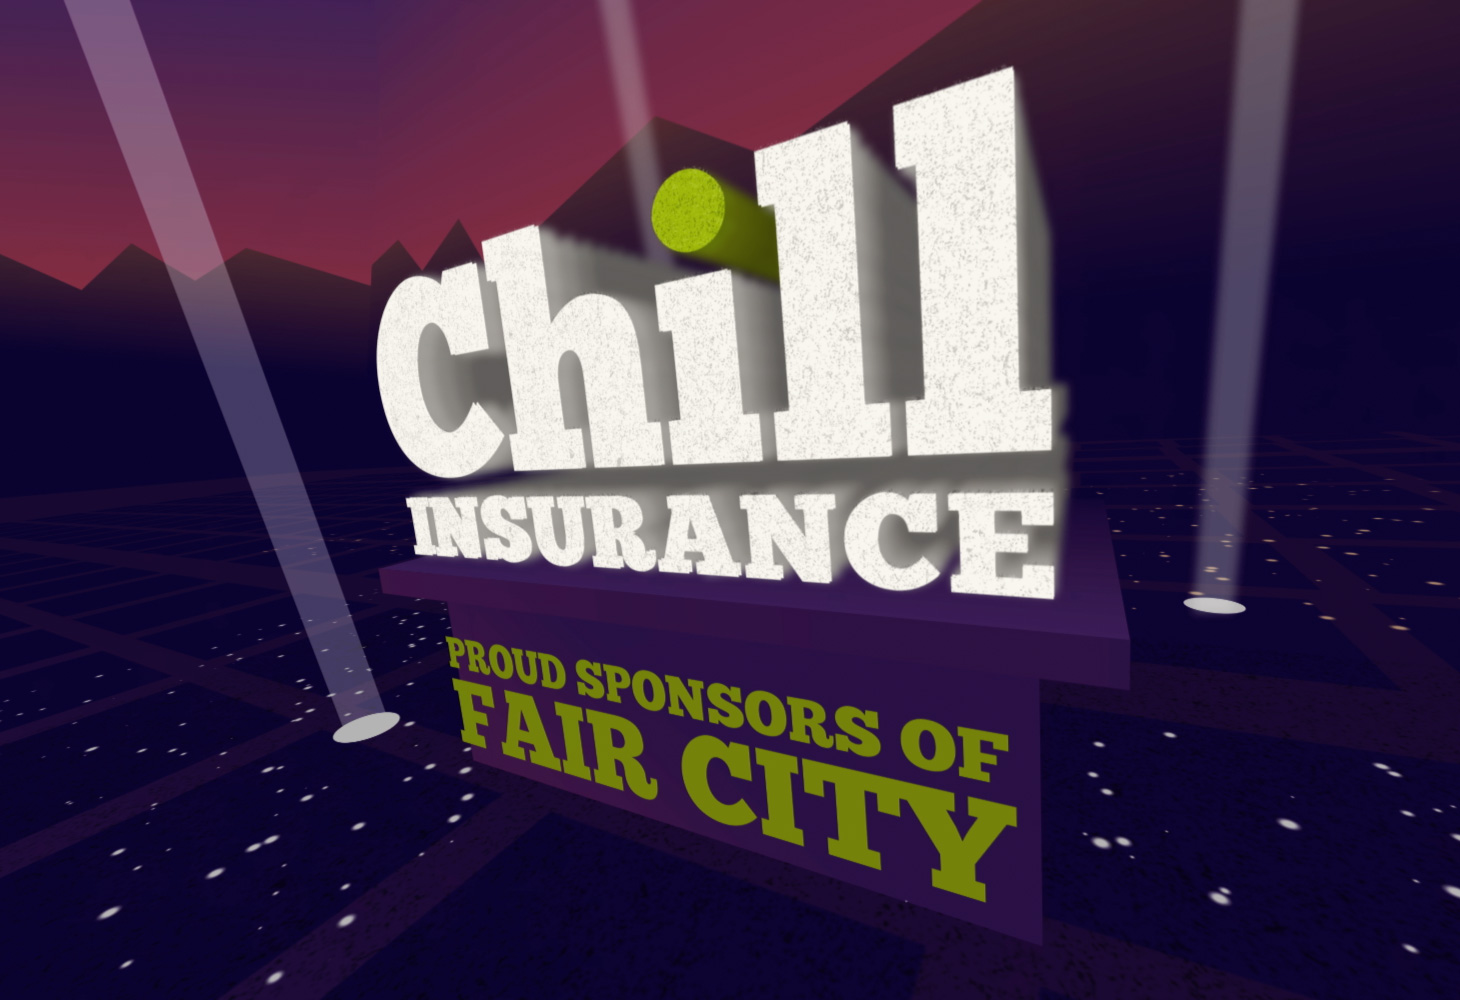 Chill - Fair City - Fair City